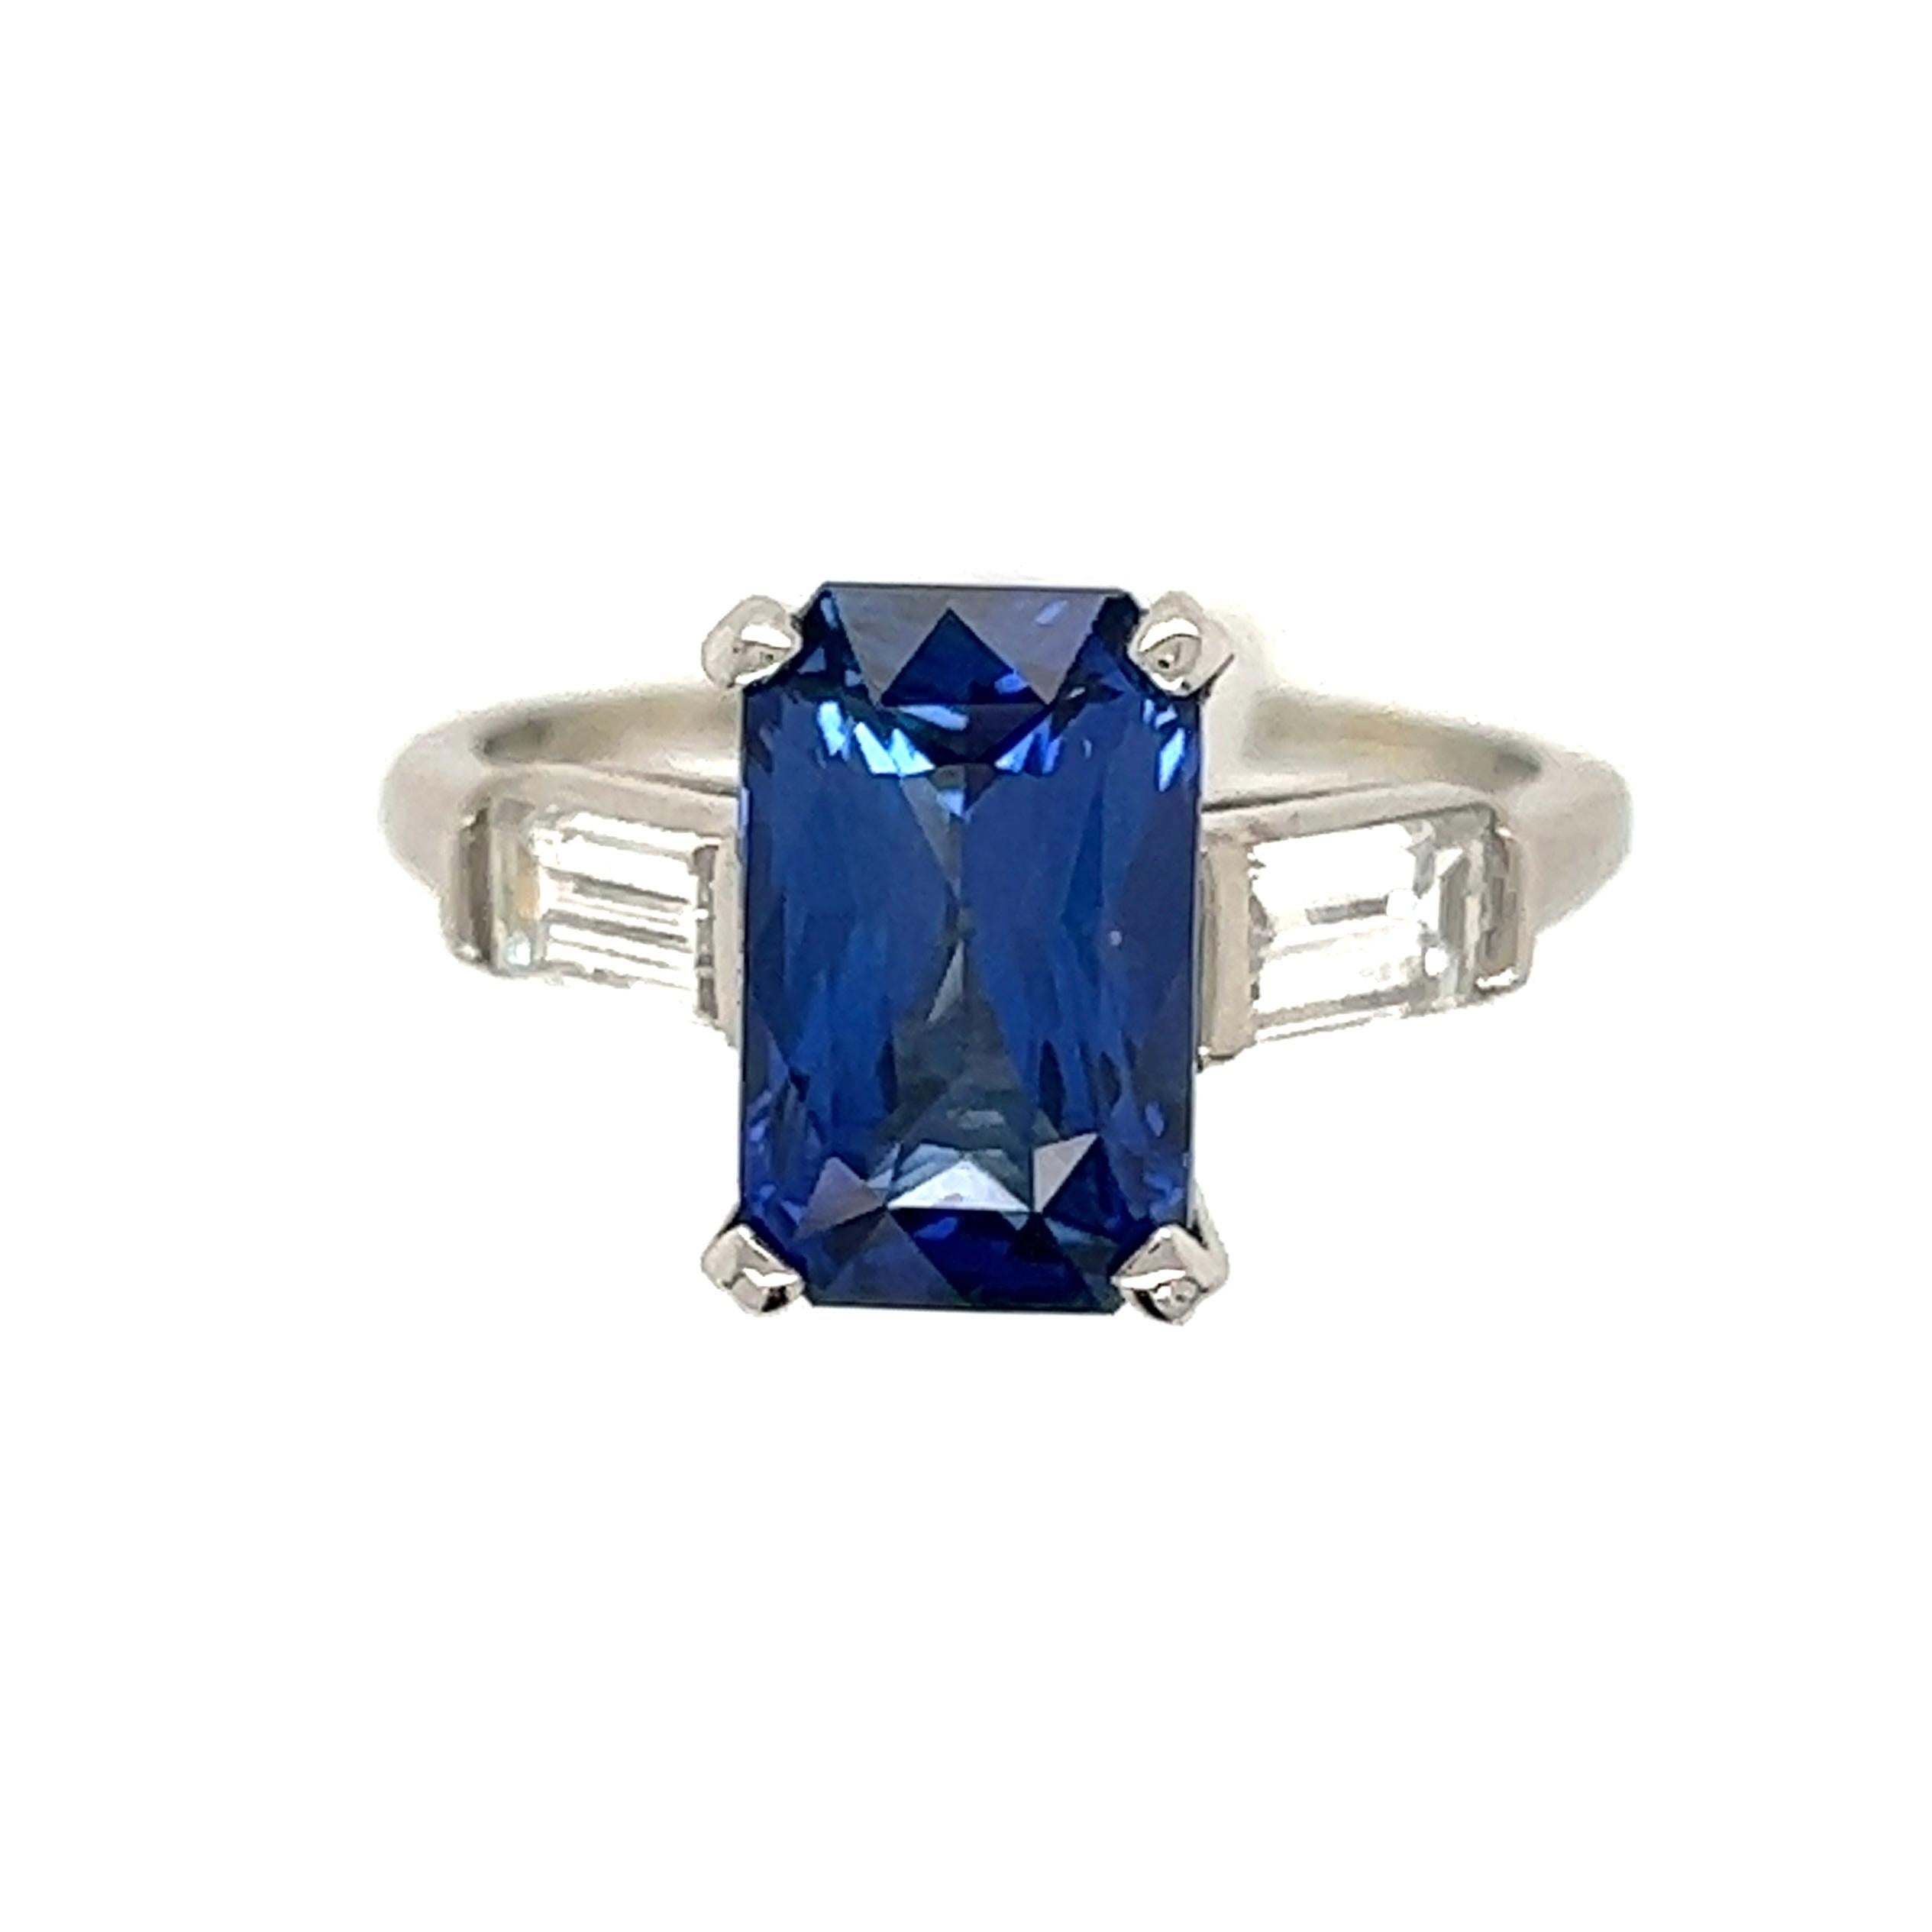 4.15 Carat Emerald Cut Sapphire GIA Diamond Platinum Ring Estate Fine Jewelry 2